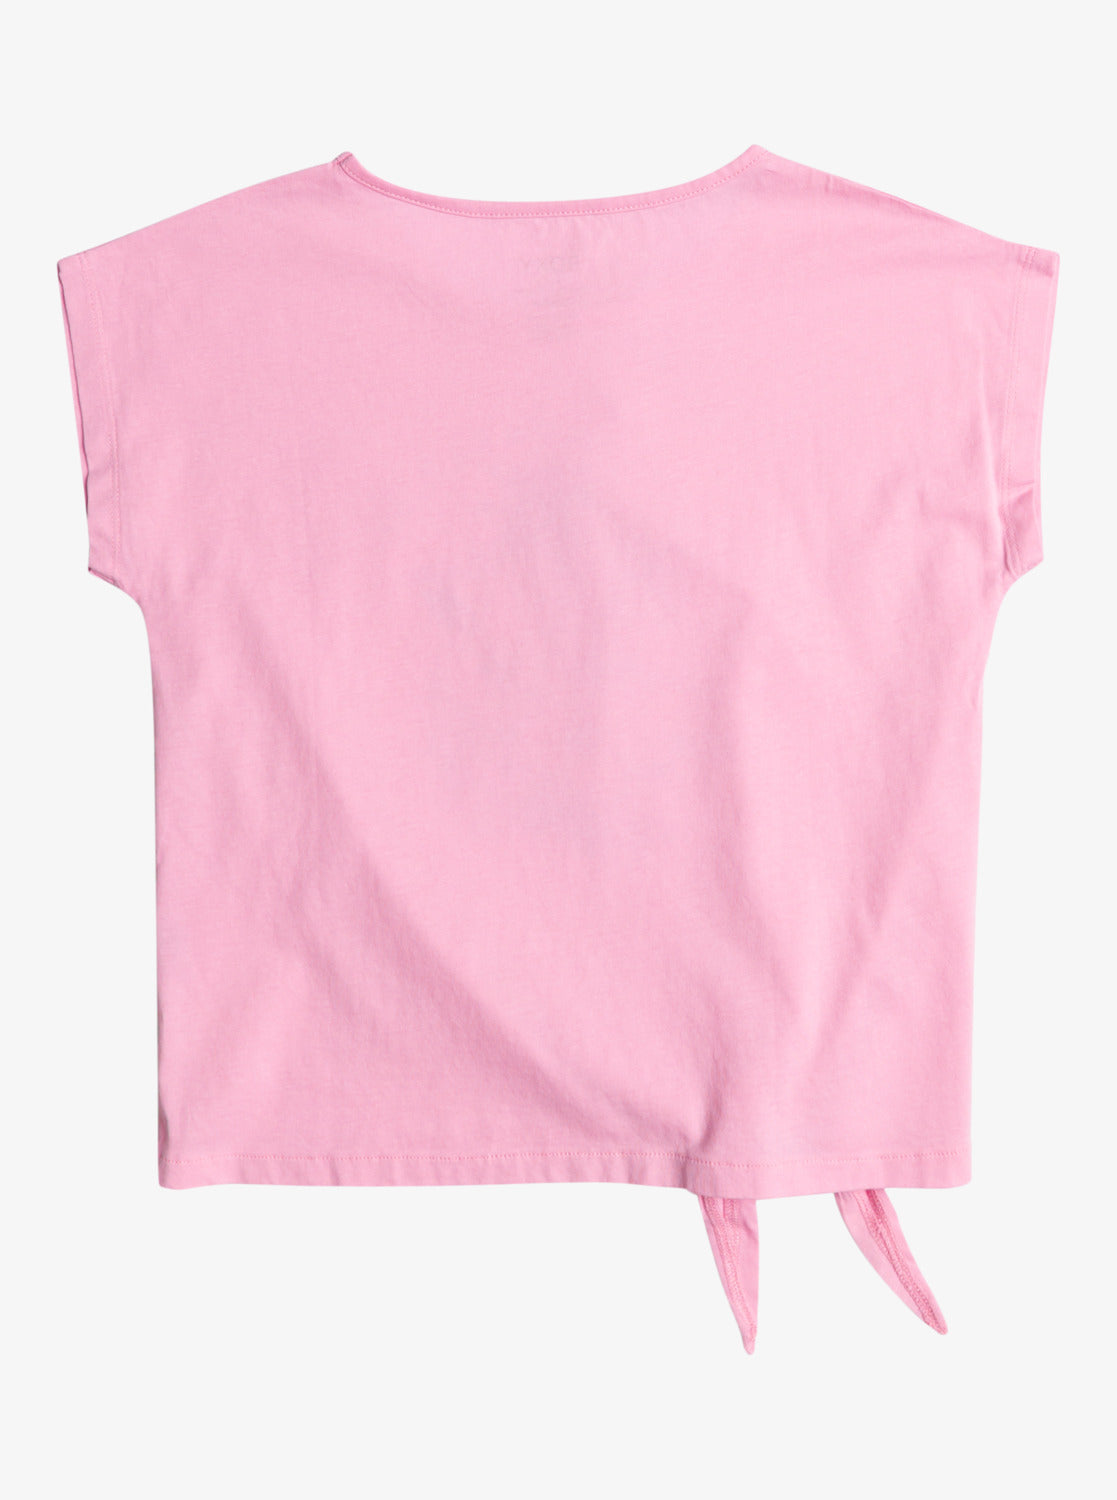 Roxy Pura Playa Girls T-Shirt in Prism Pink